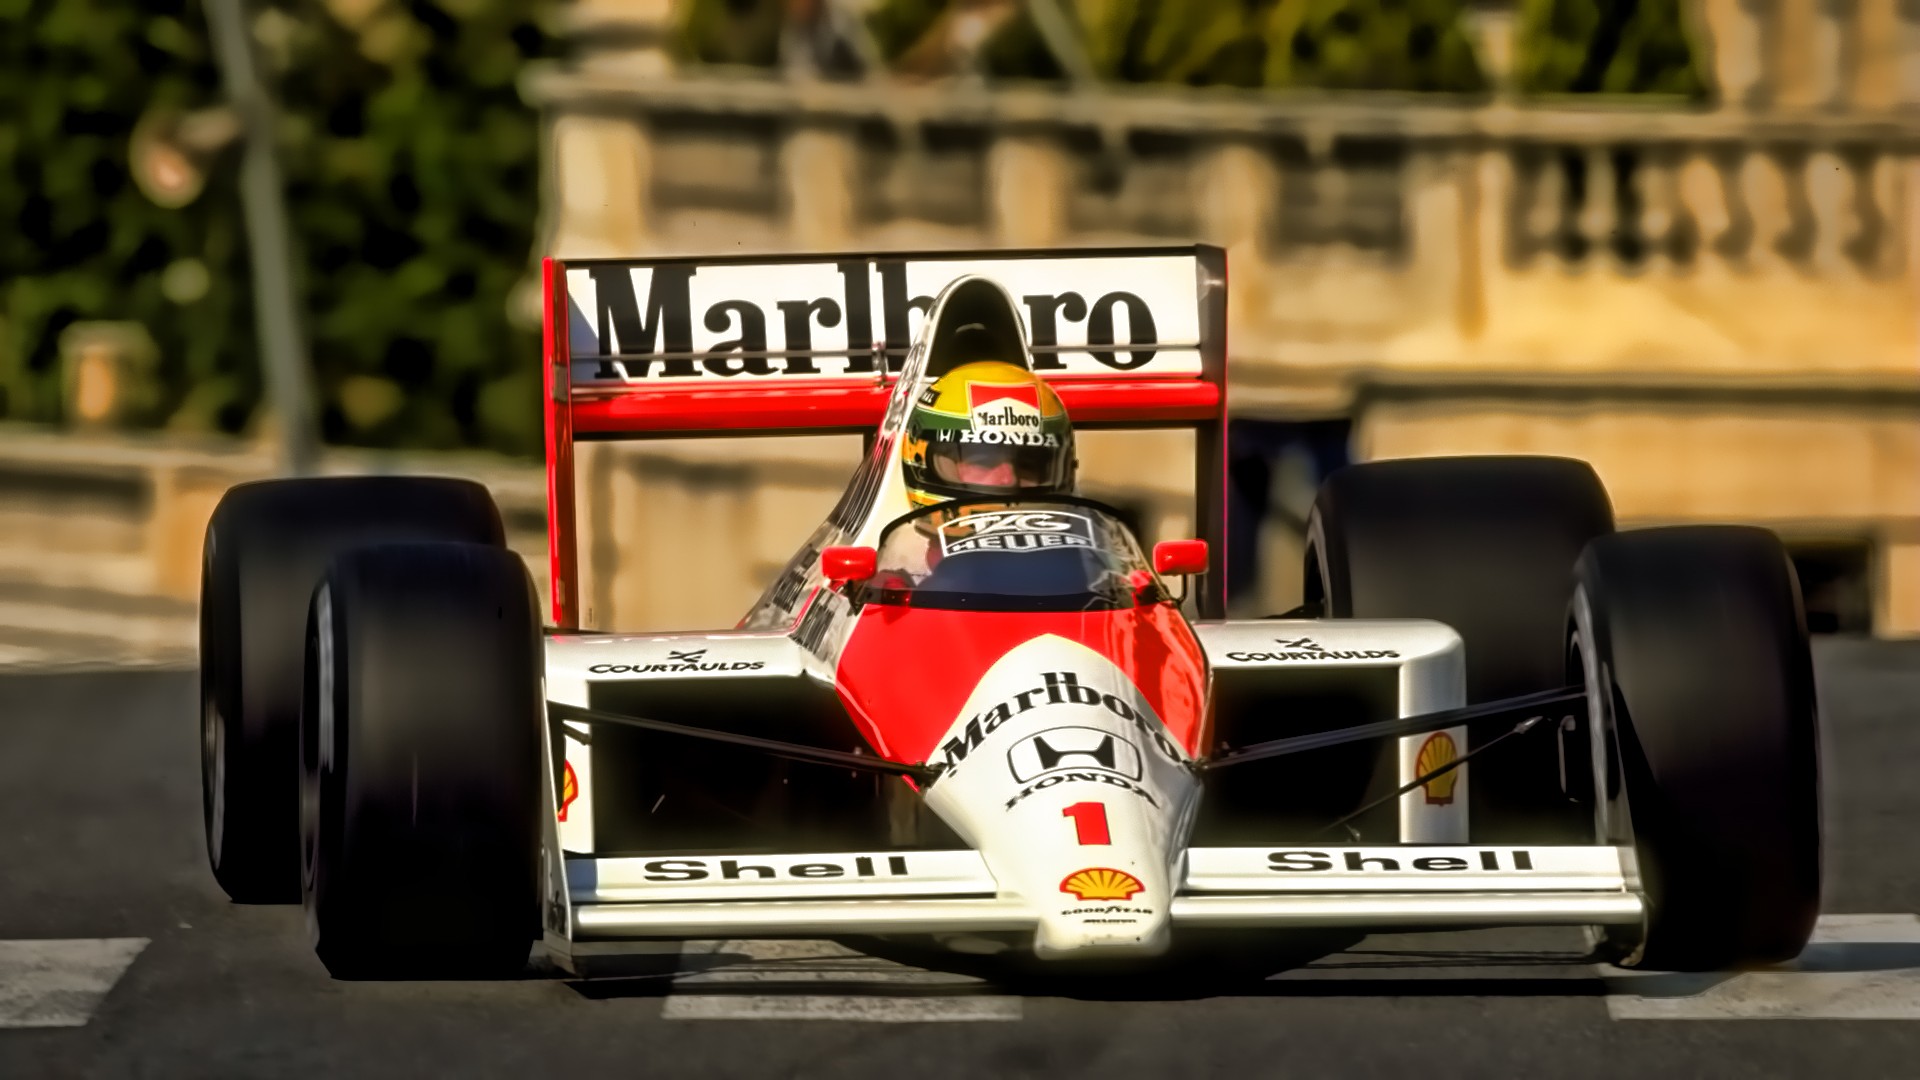 General 1920x1080 Ayrton Senna Formula 1 Monaco Marlboro racing red cars car vehicle motorsport sport deceased Racing driver Brazilian livery